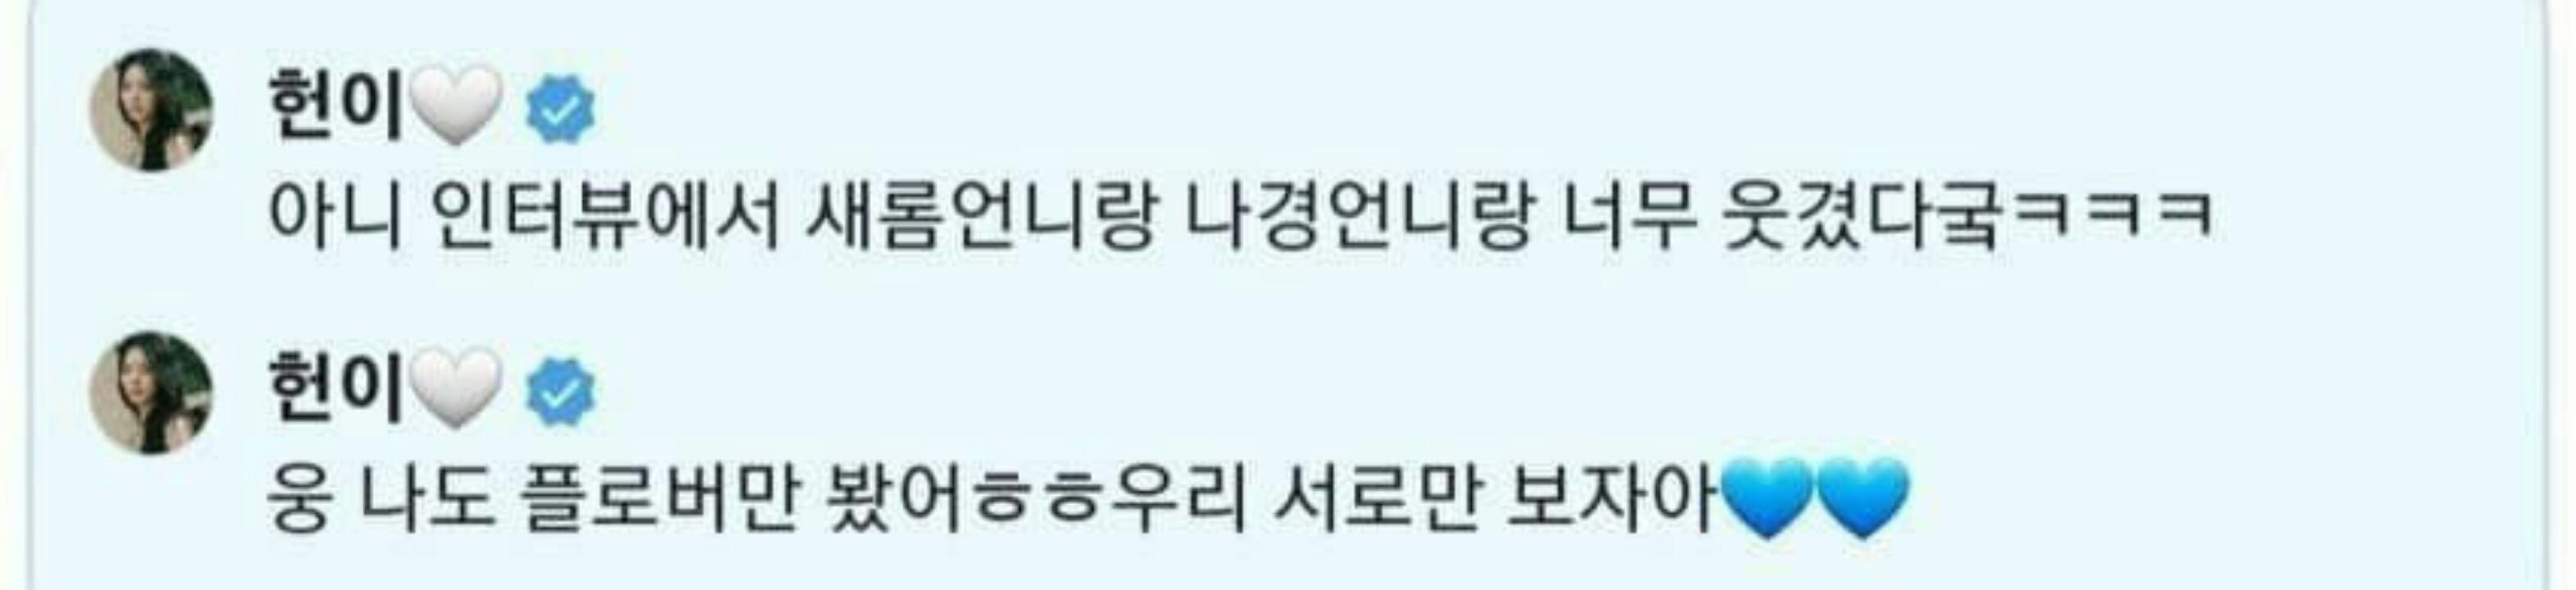 Interaksi Jiheon dan Sunghoon di Music Bank)